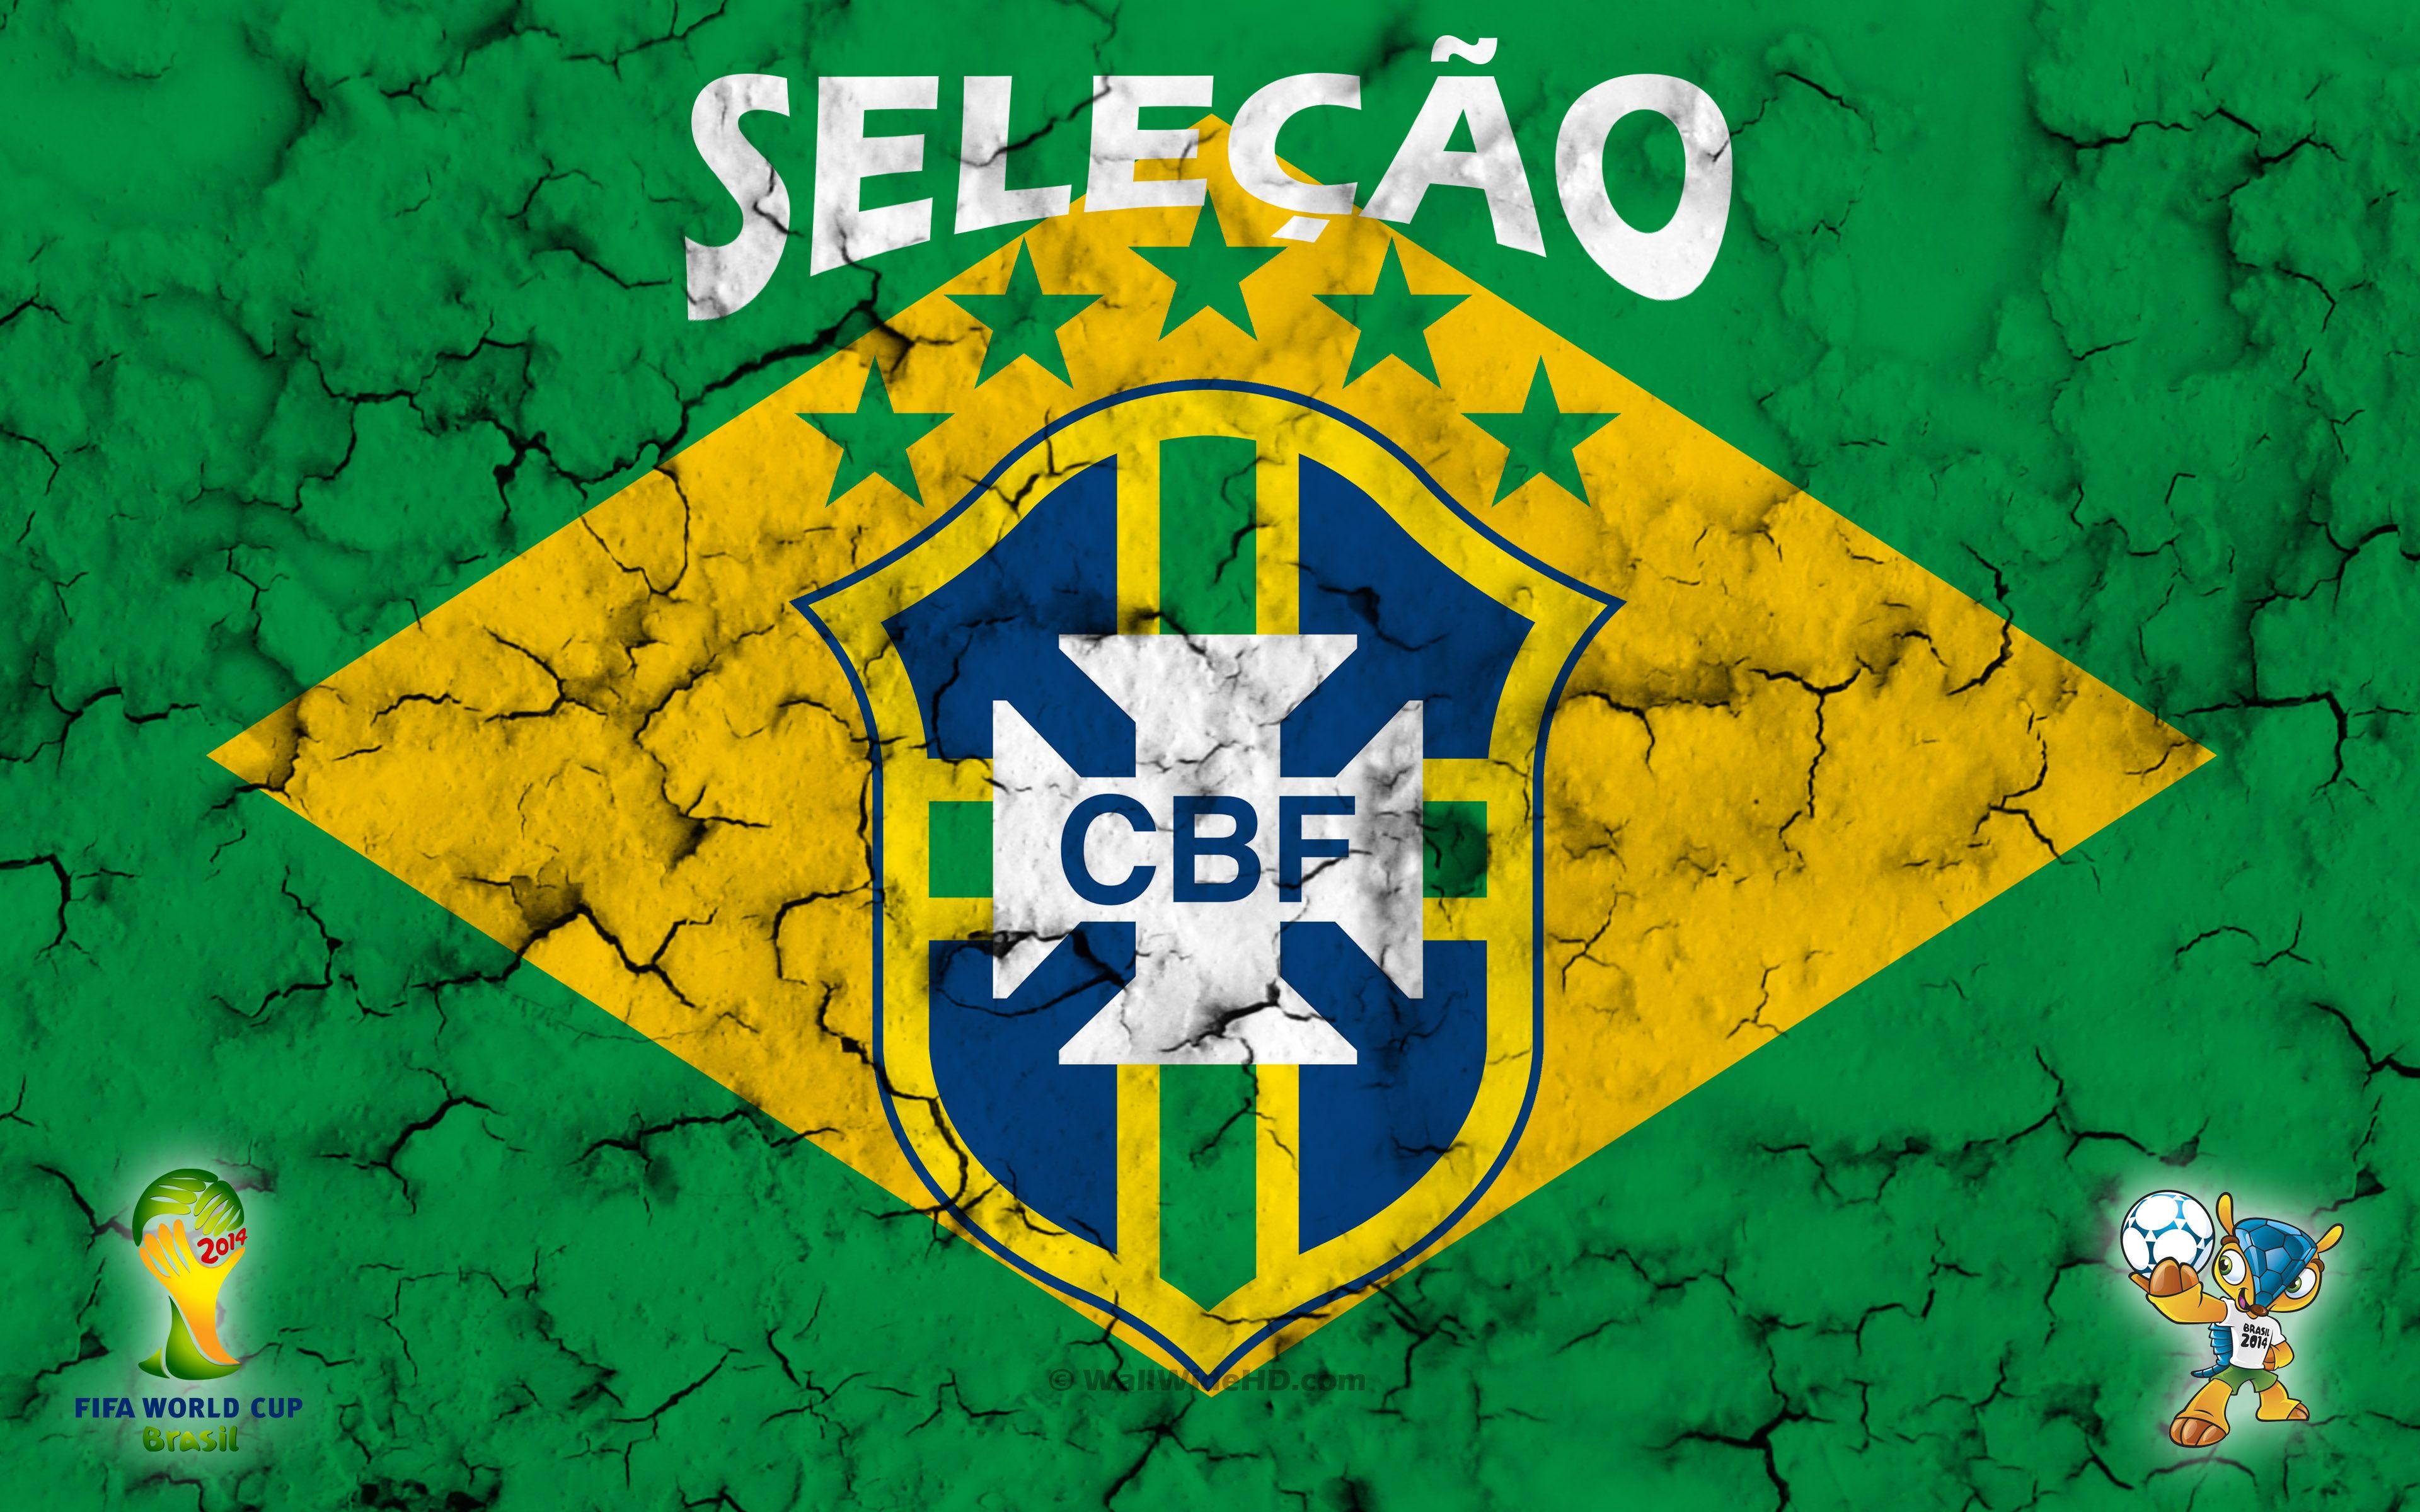 Brazil Football Wallpaper